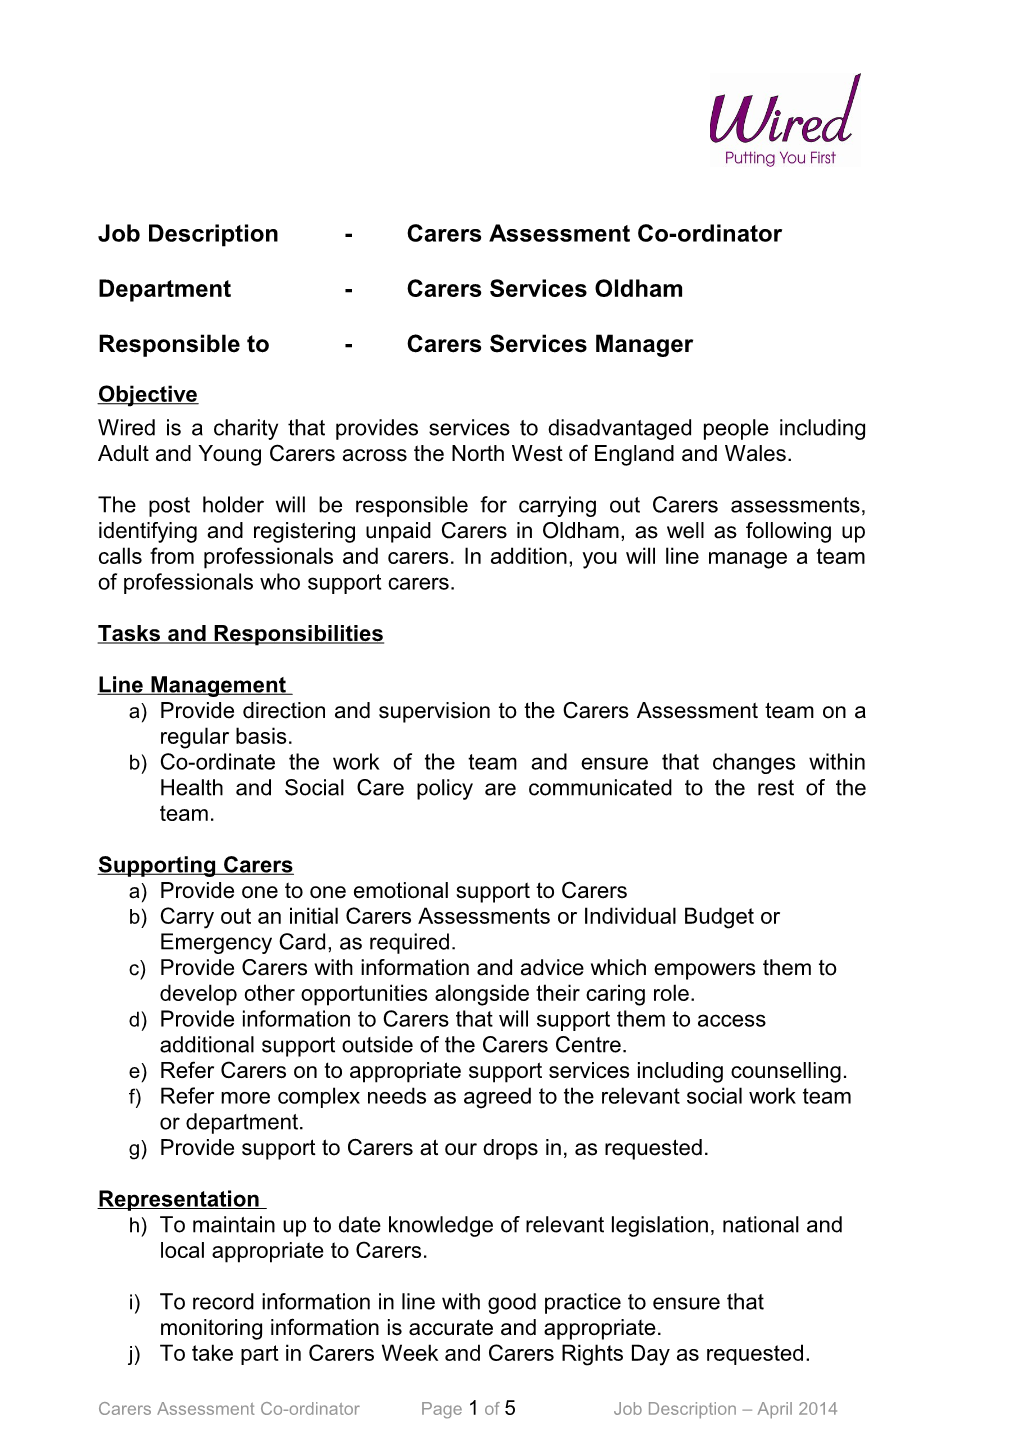 Job Description - Carers Assessment Co-Ordinator